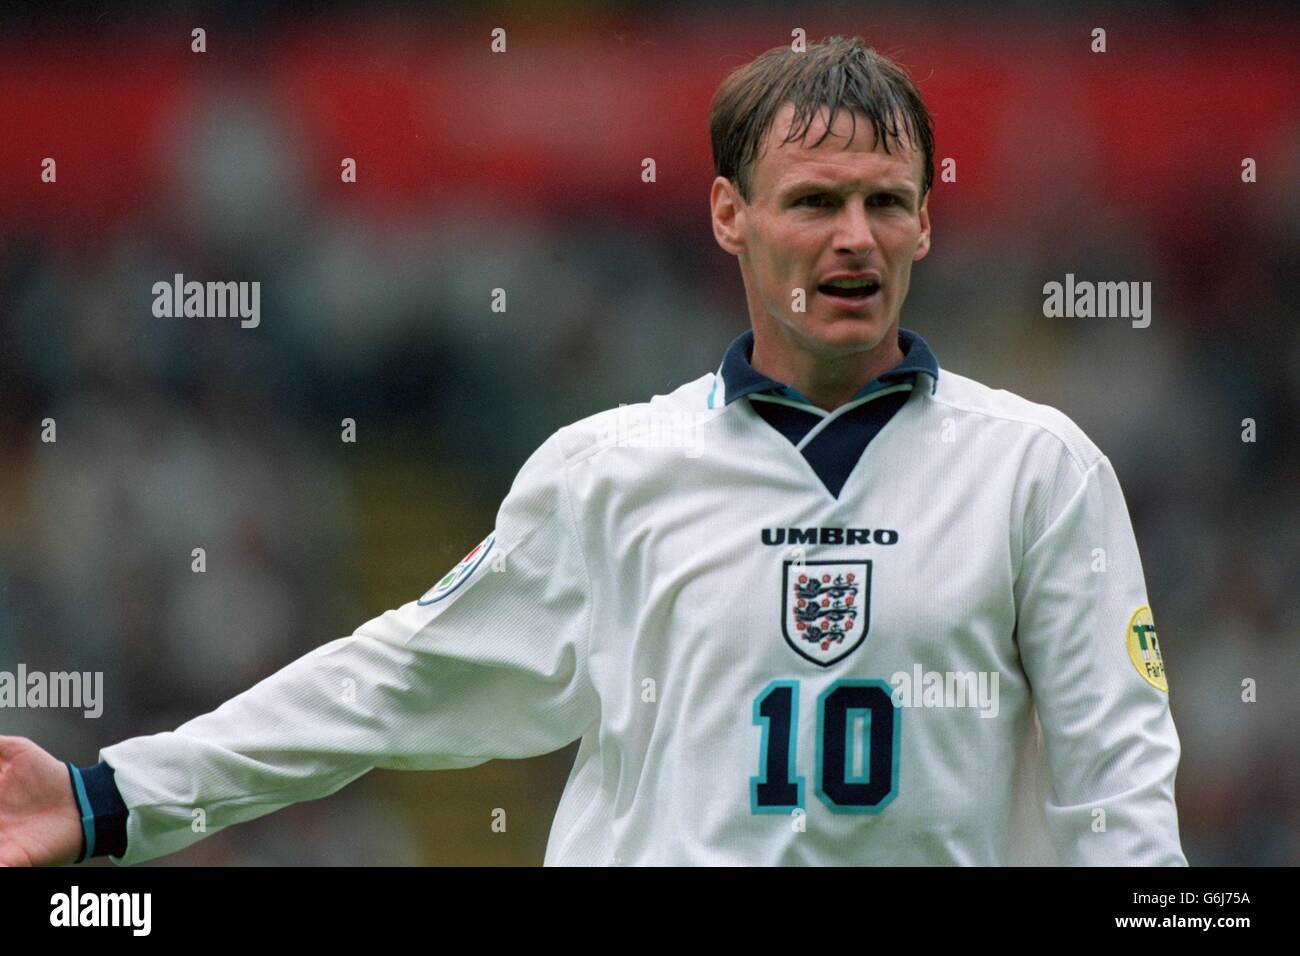 Calcio, Euro 96. Inghilterra contro Spagna, Wembley. Teddy Sheringham, Inghilterra Foto Stock